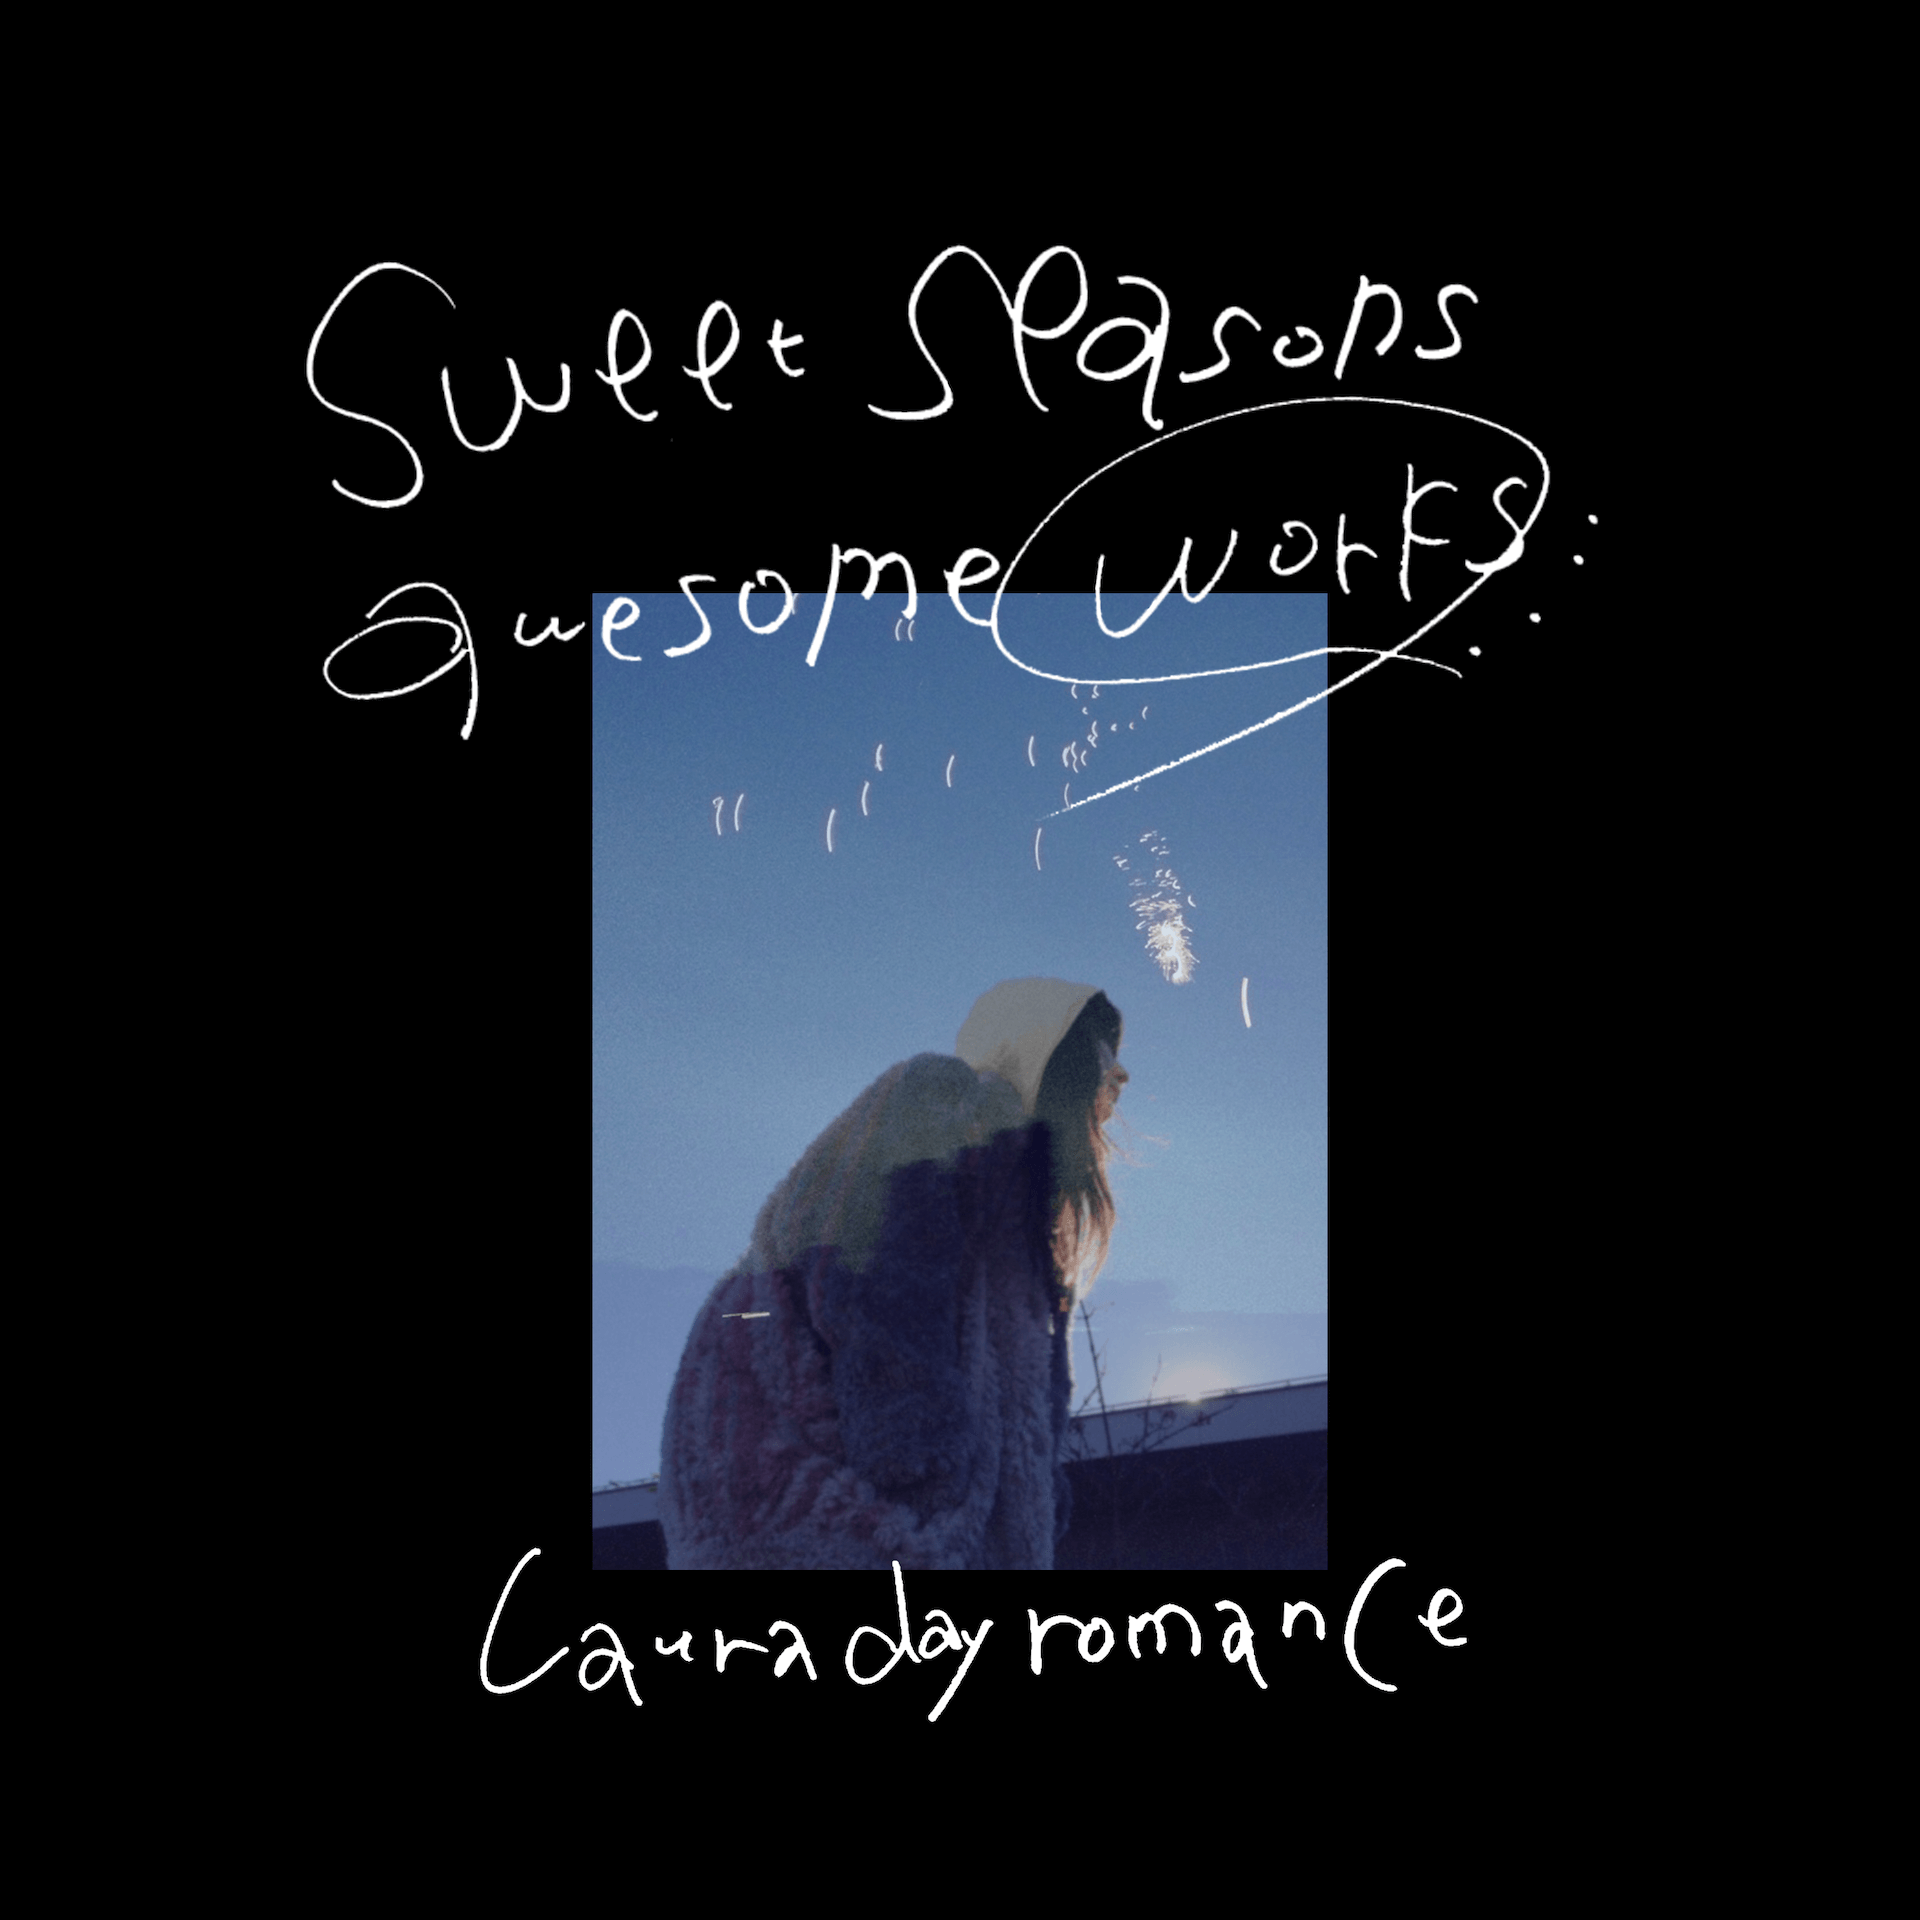 Laura day romance、4作連続配信企画の冬EP『Works.ep』をリリース music230124-Lauradayromance1